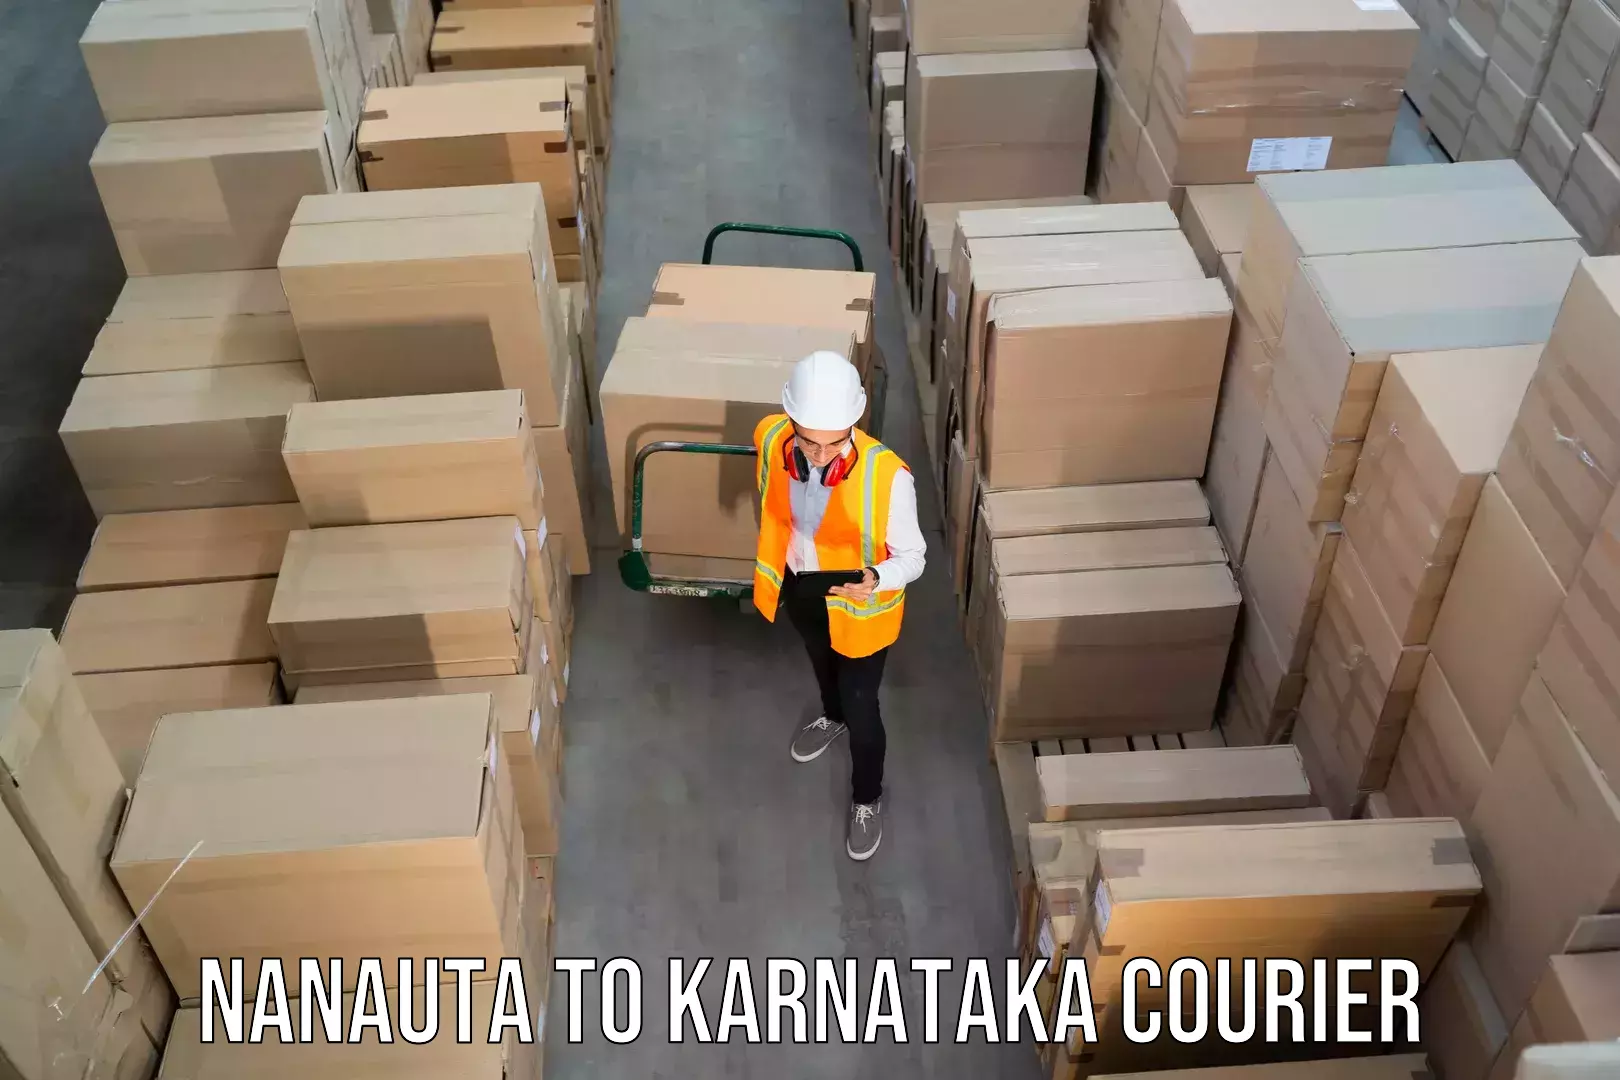 Efficient order fulfillment in Nanauta to Karnataka